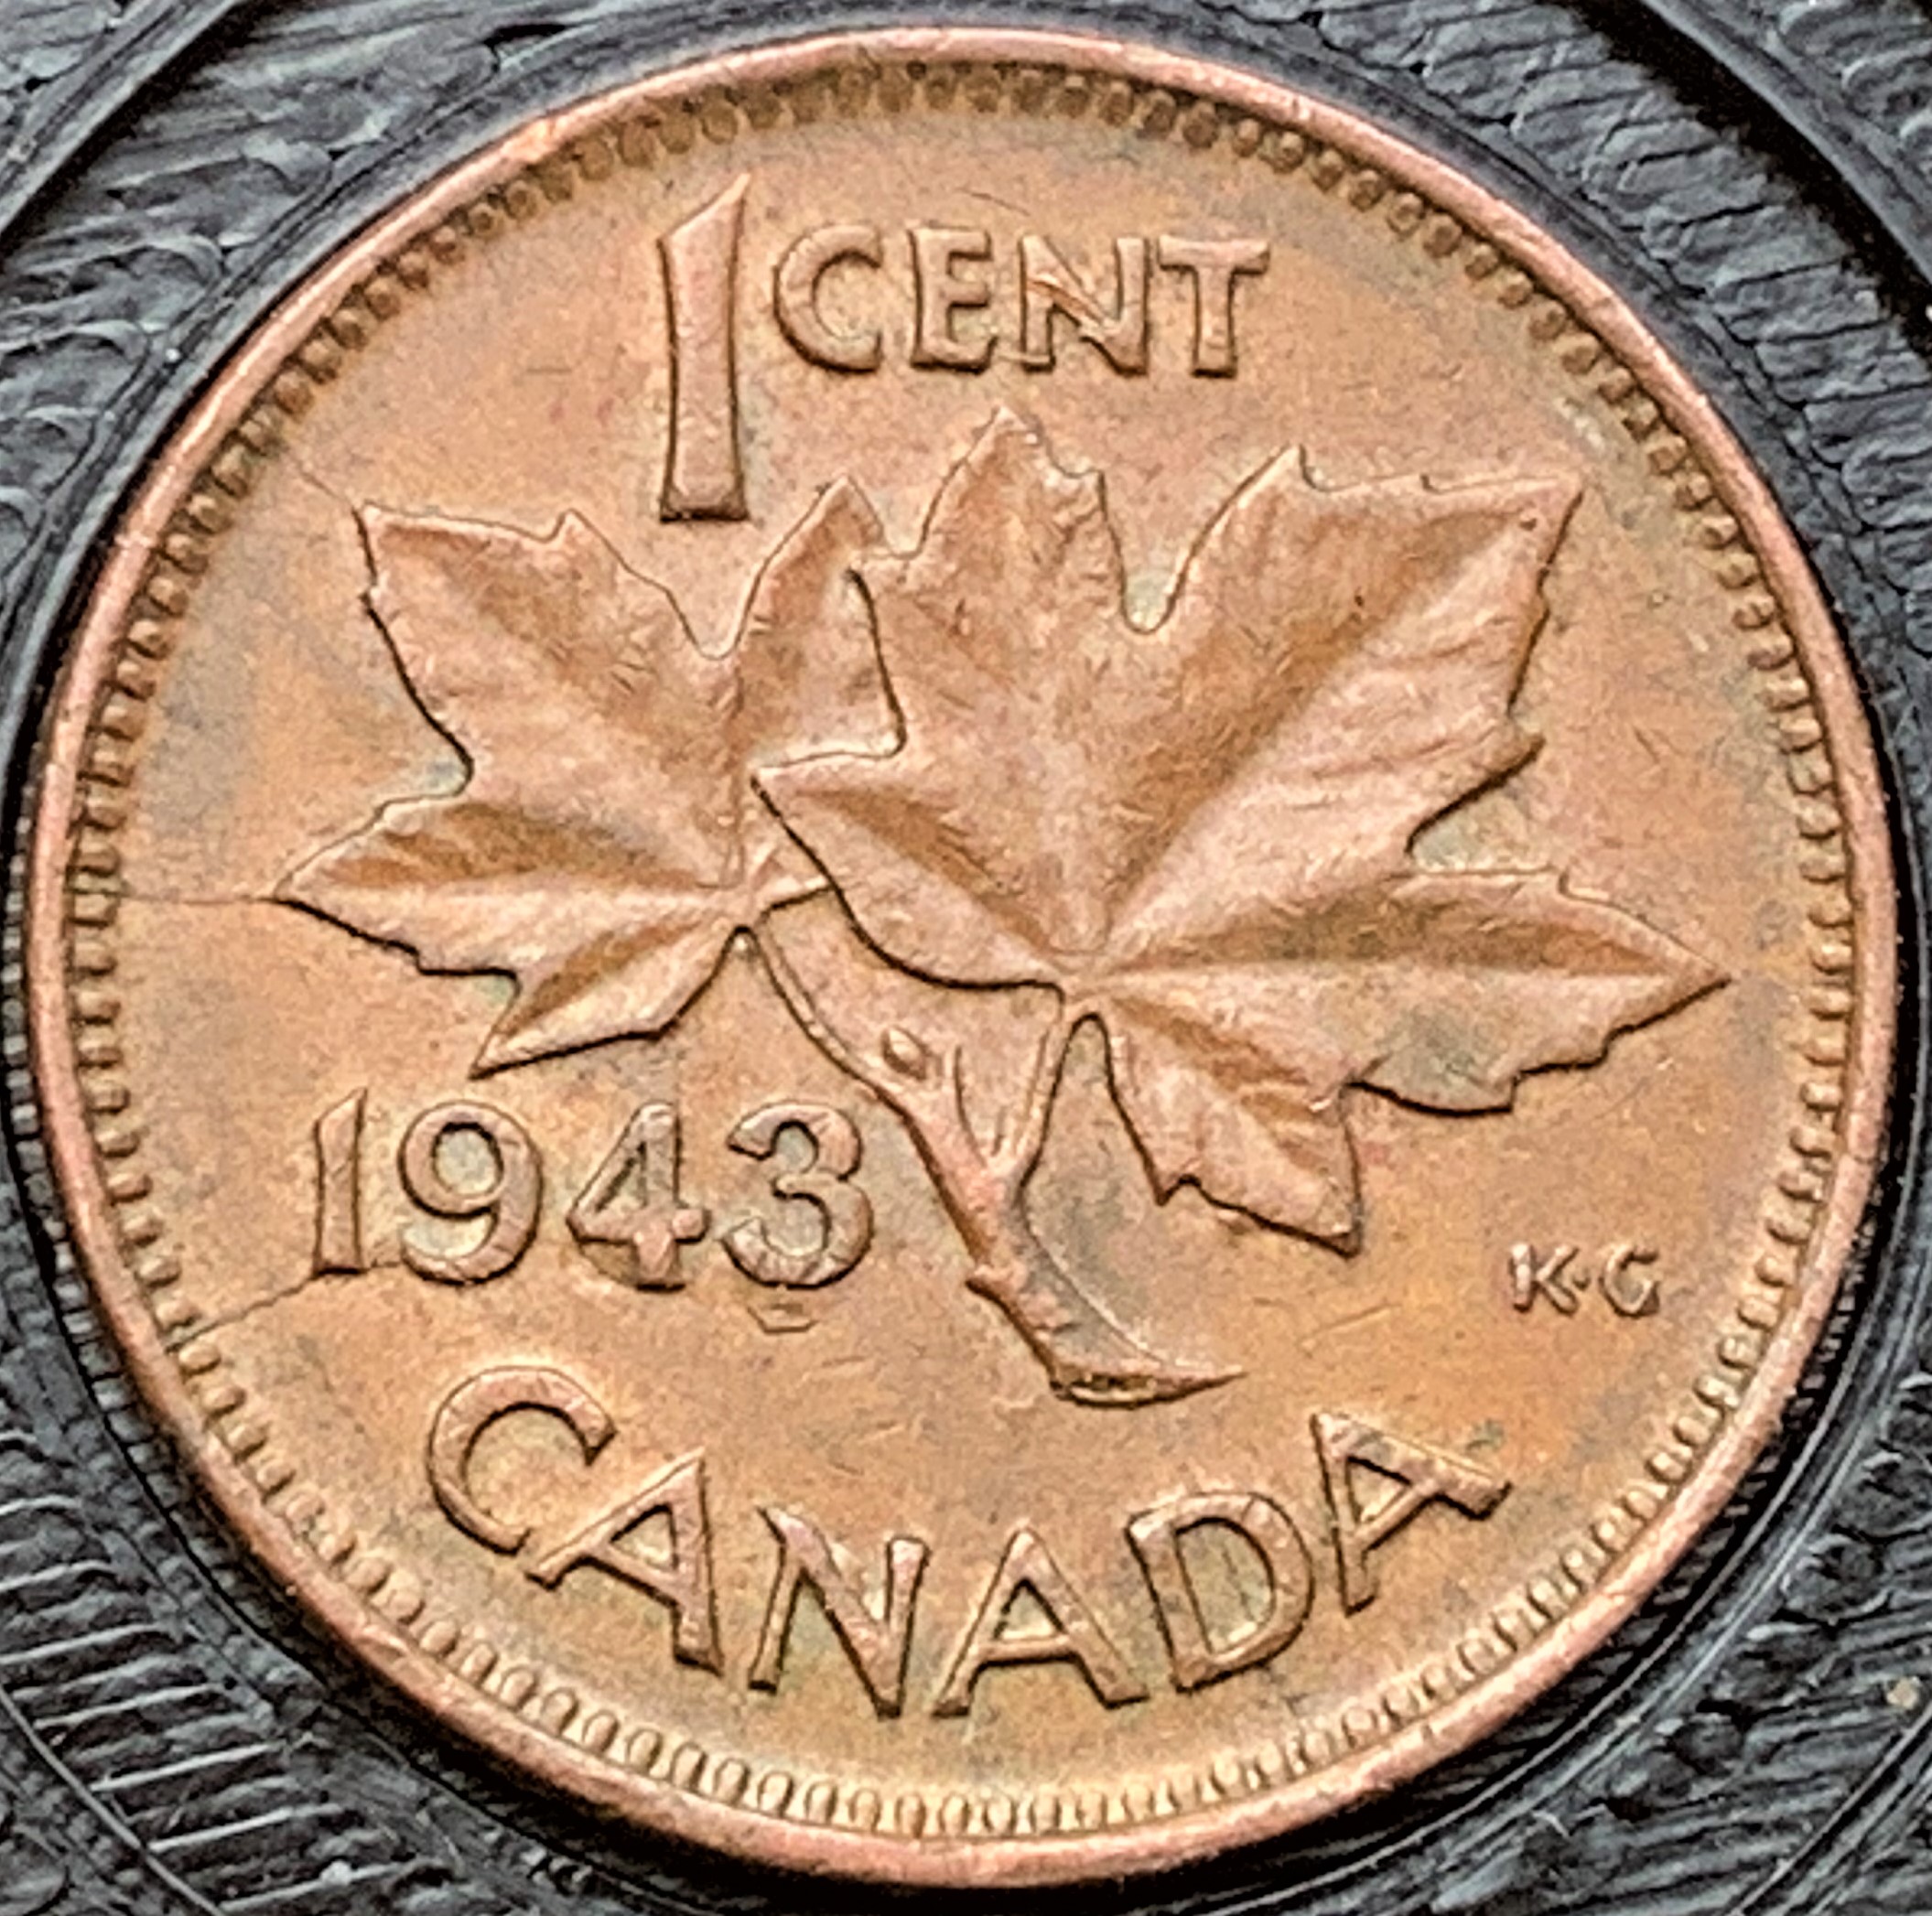 1 cent 1943 LP66h.jpg